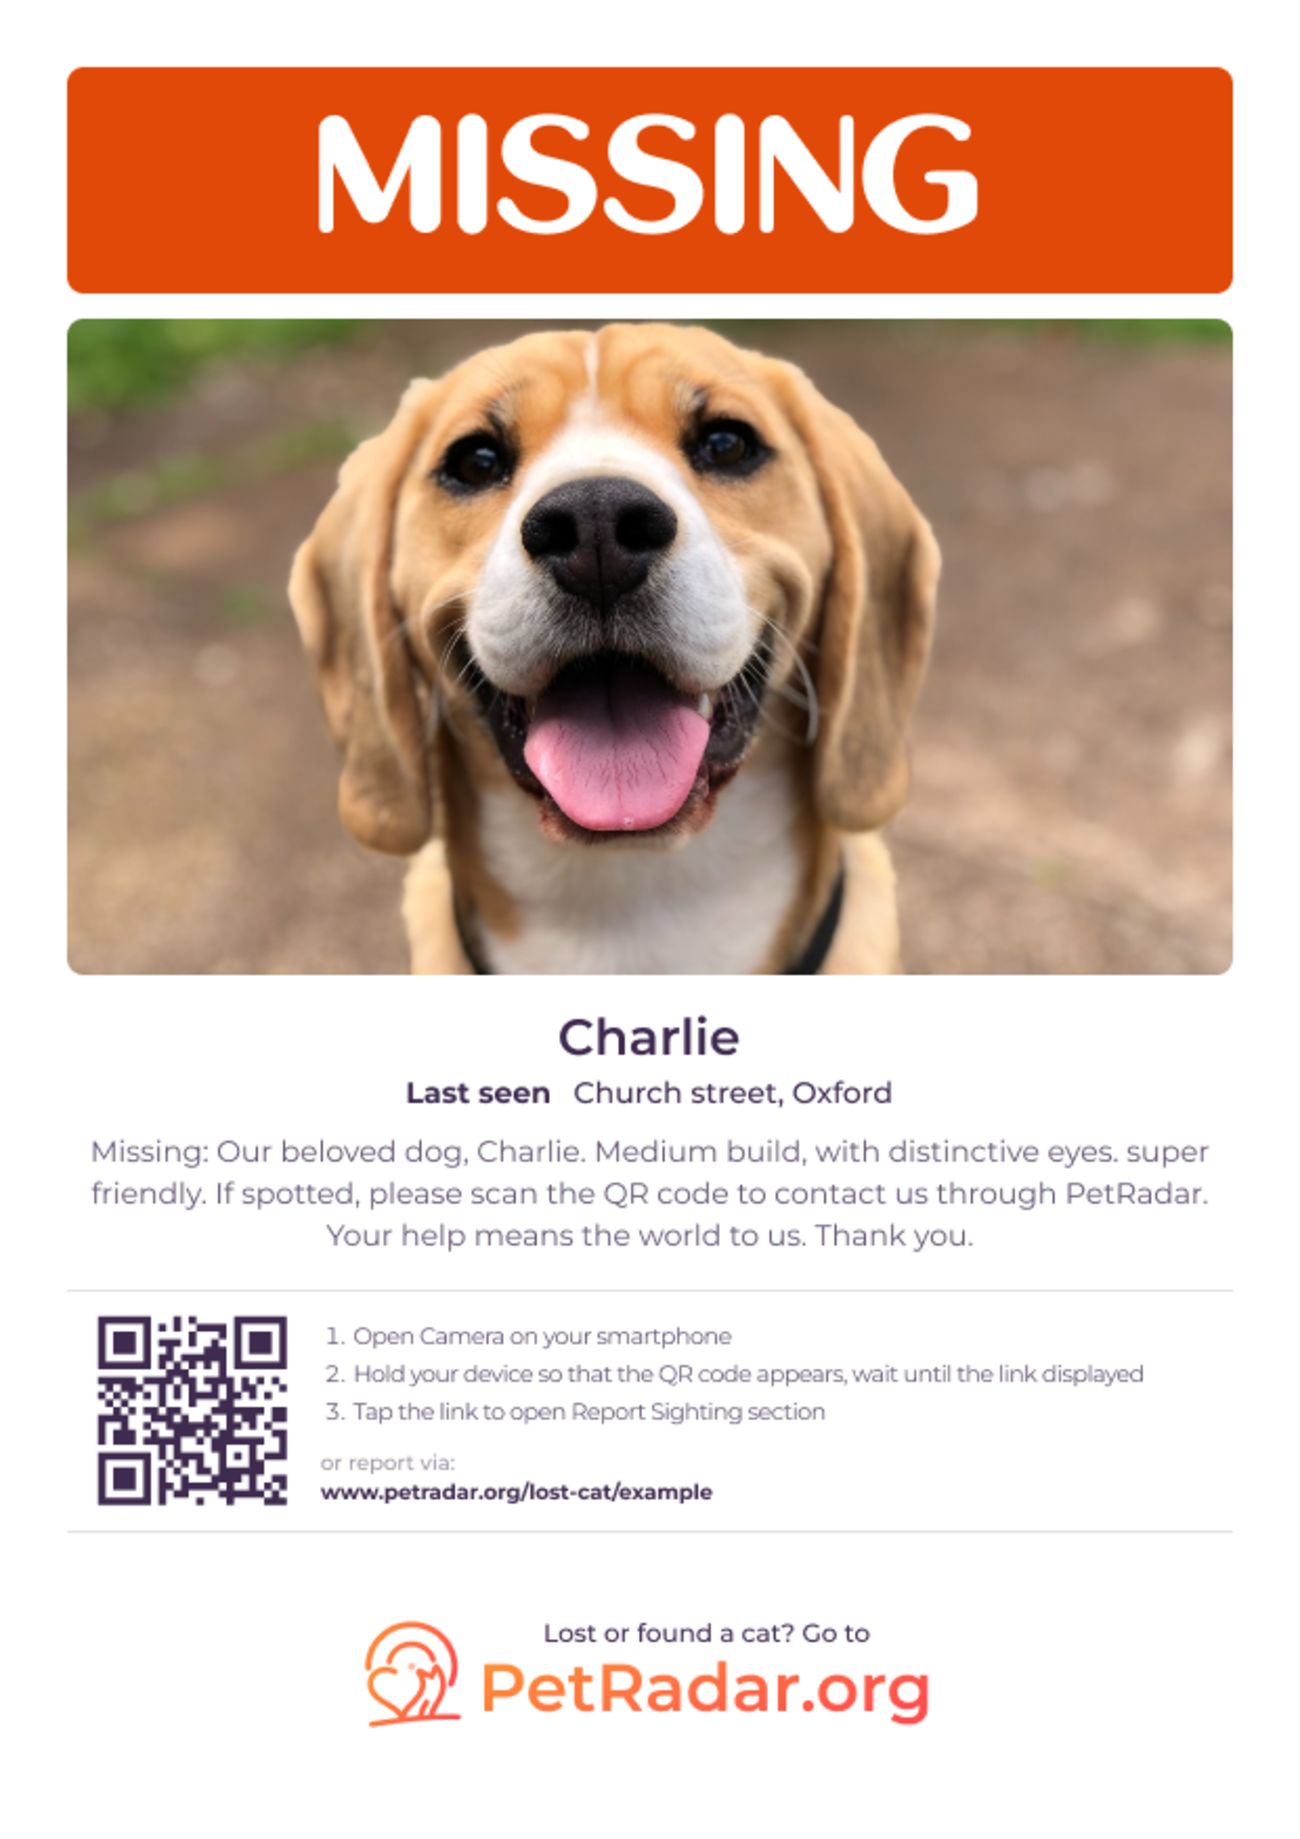 PetRadarの無料ダウンロード可能な迷子犬用ポスター